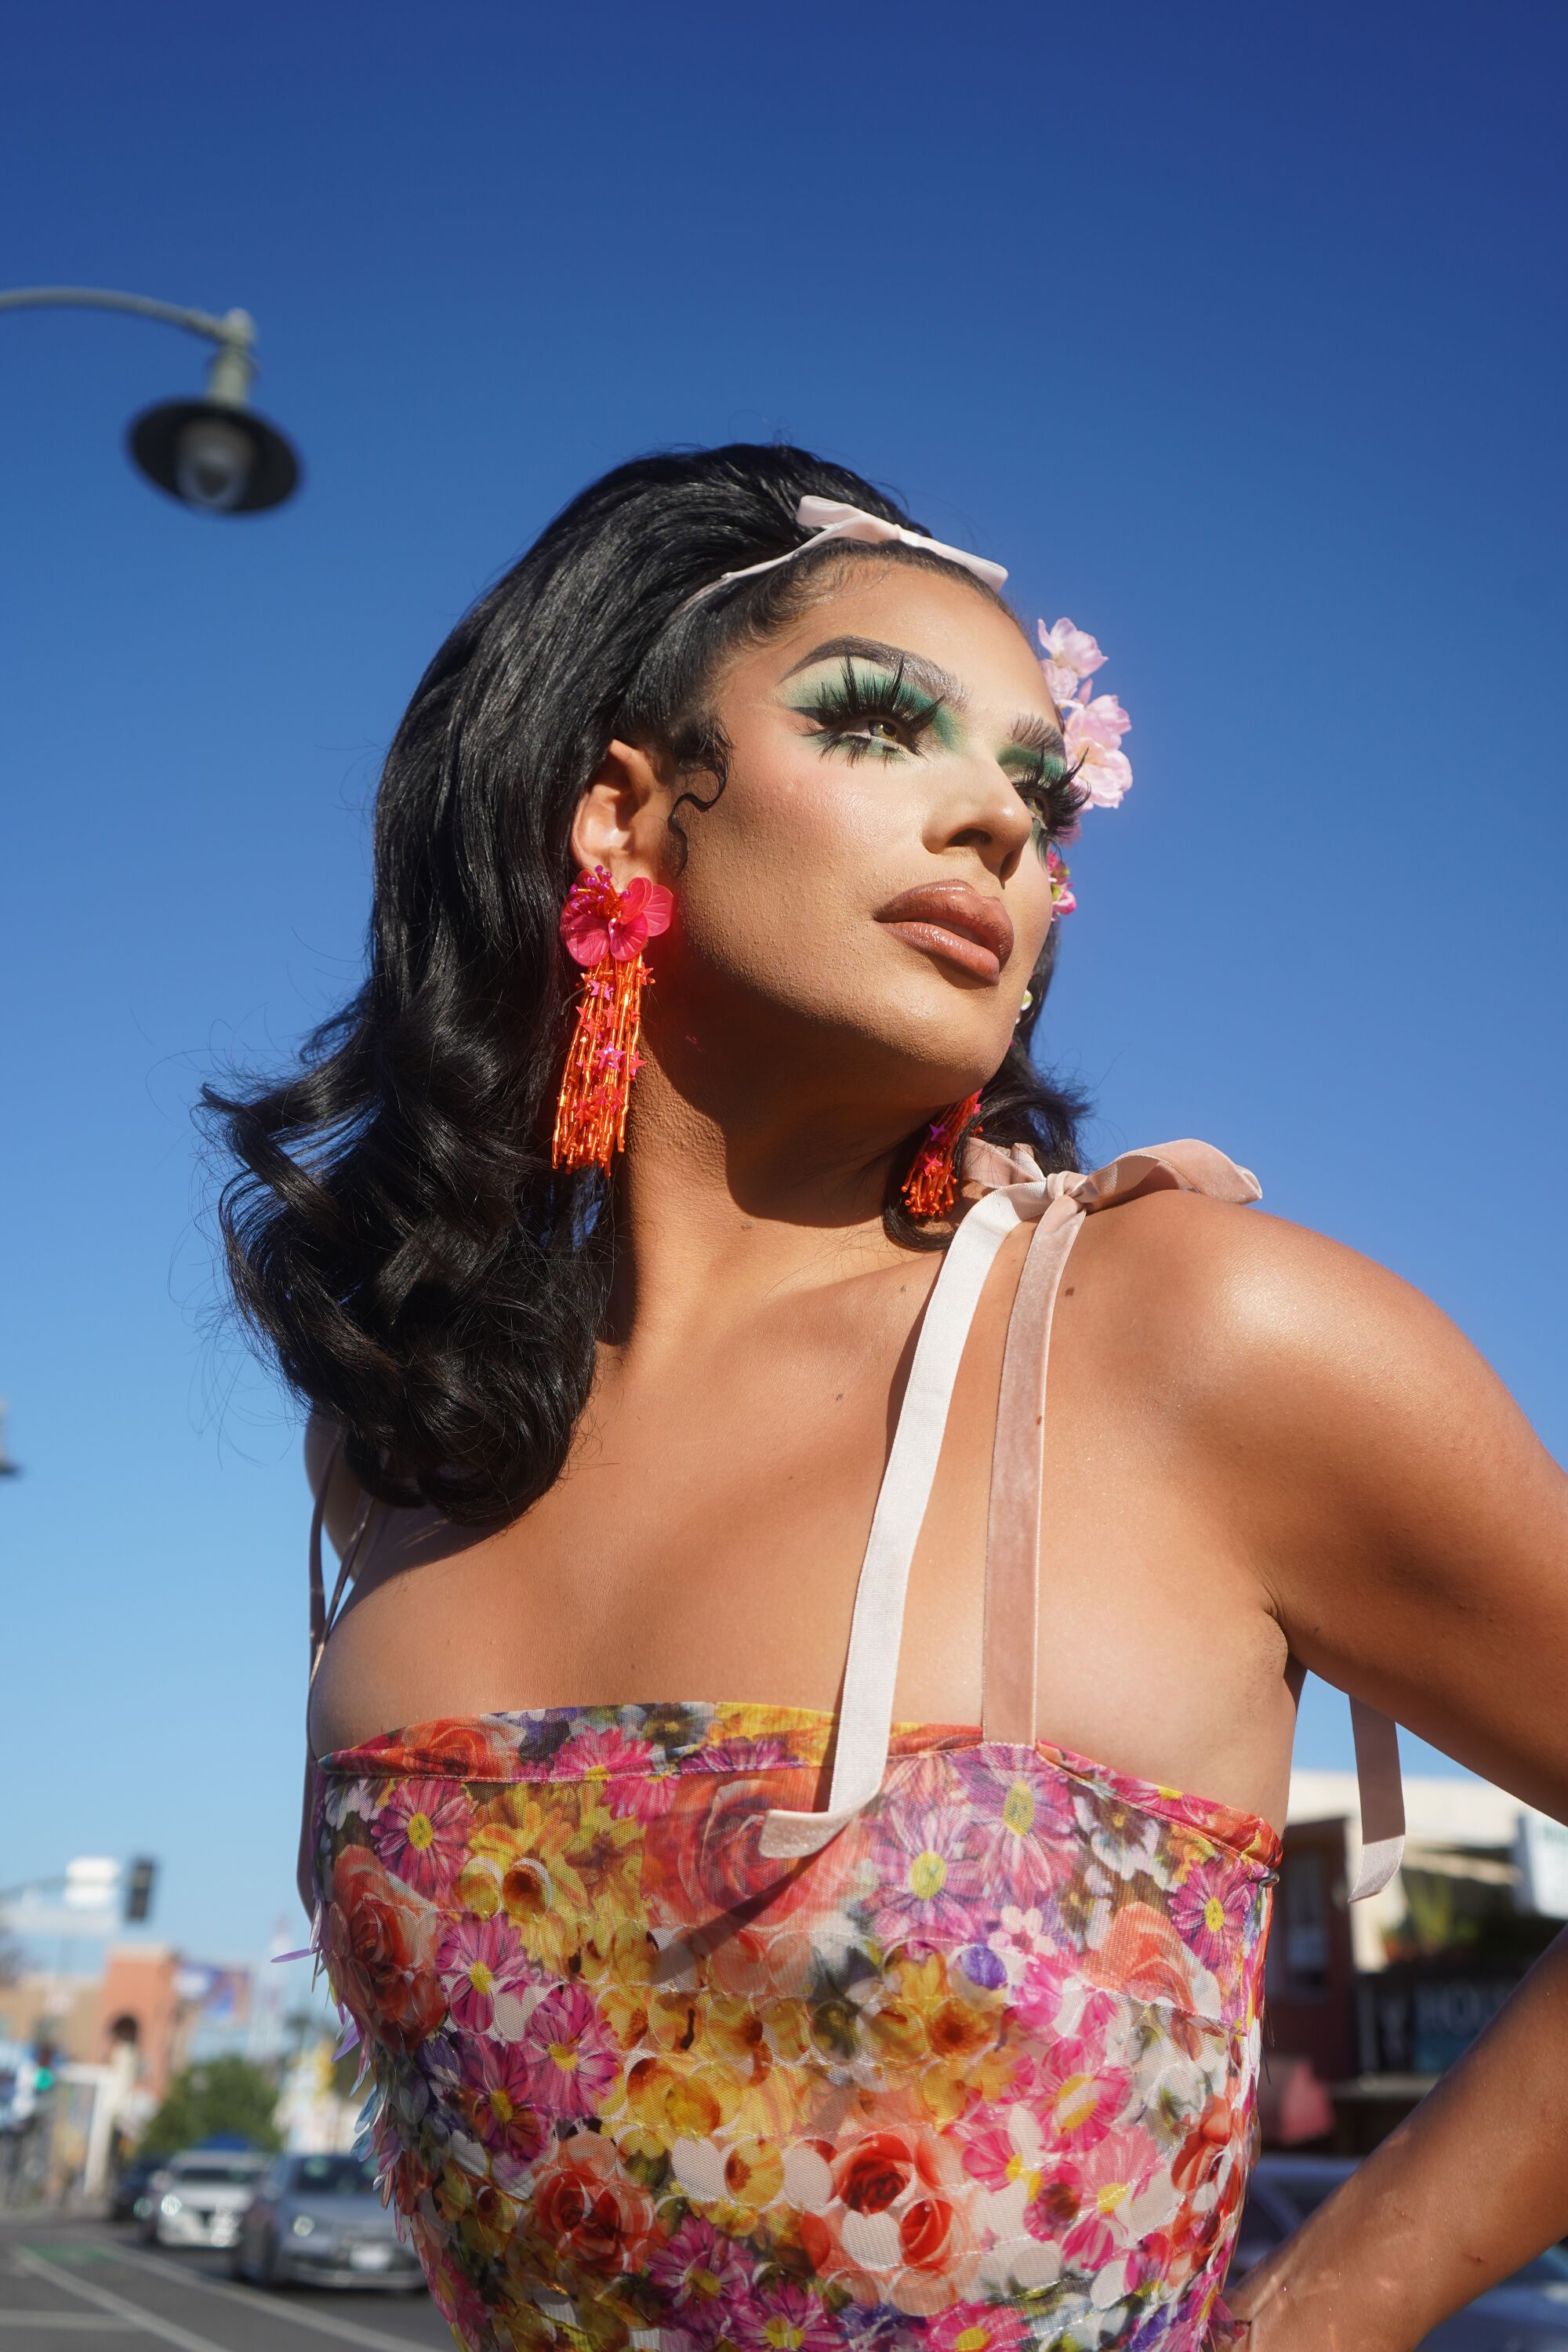 Drag artist Valentina poses in L.A.